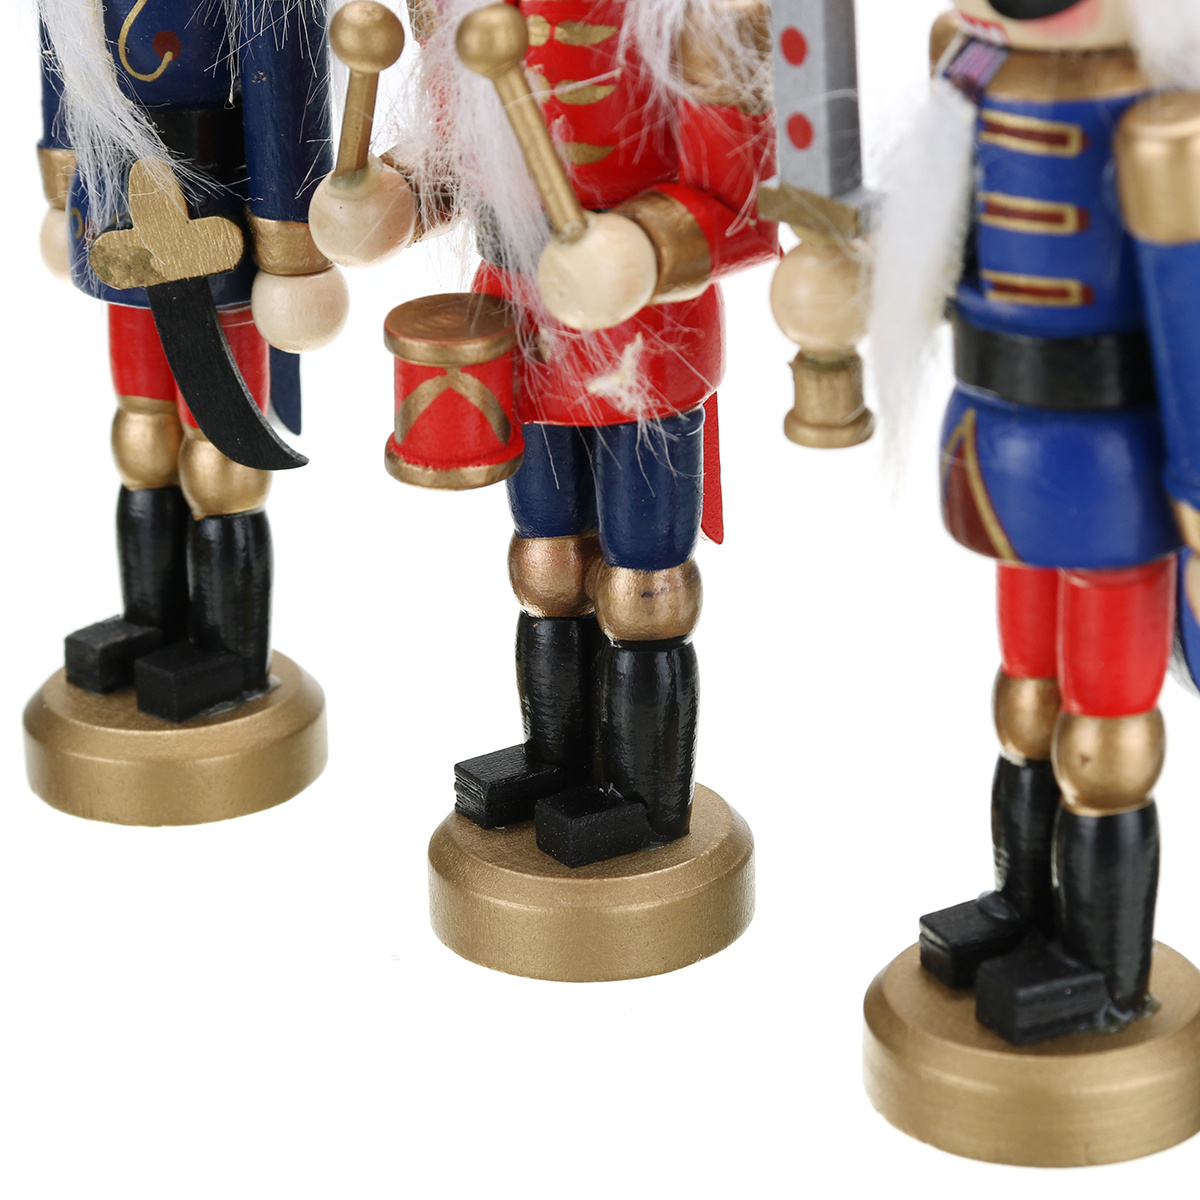 Wooden-Nutcracker-Doll-Soldier-Vintage-Handcraft-Decoration-Christmas-Gifts-1787904-11